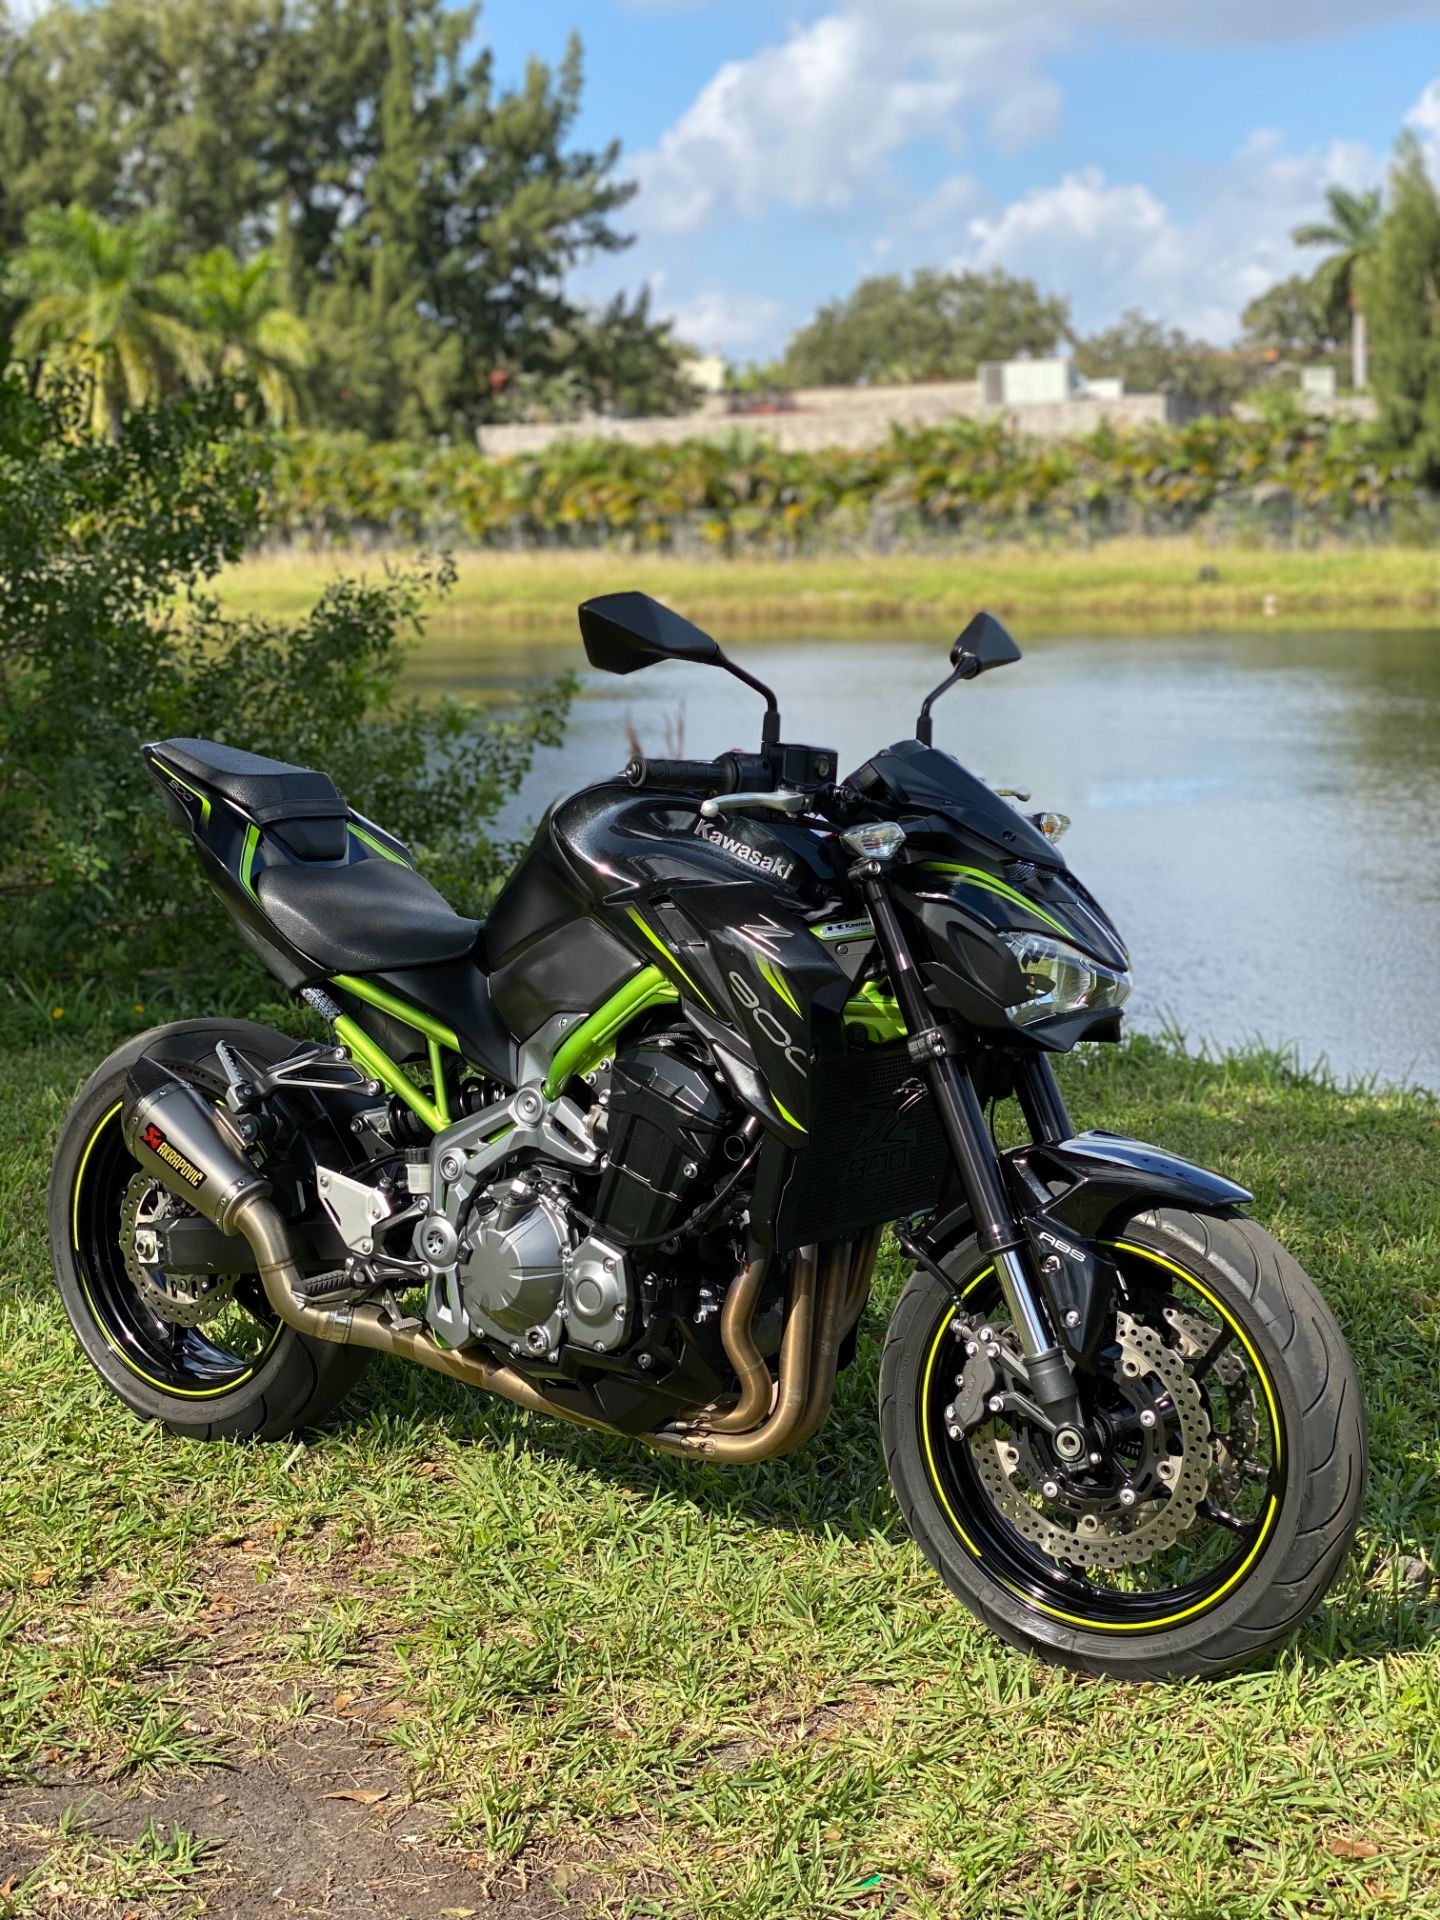 2019 Kawasaki Z900 ABS in North Miami Beach, Florida - Photo 2